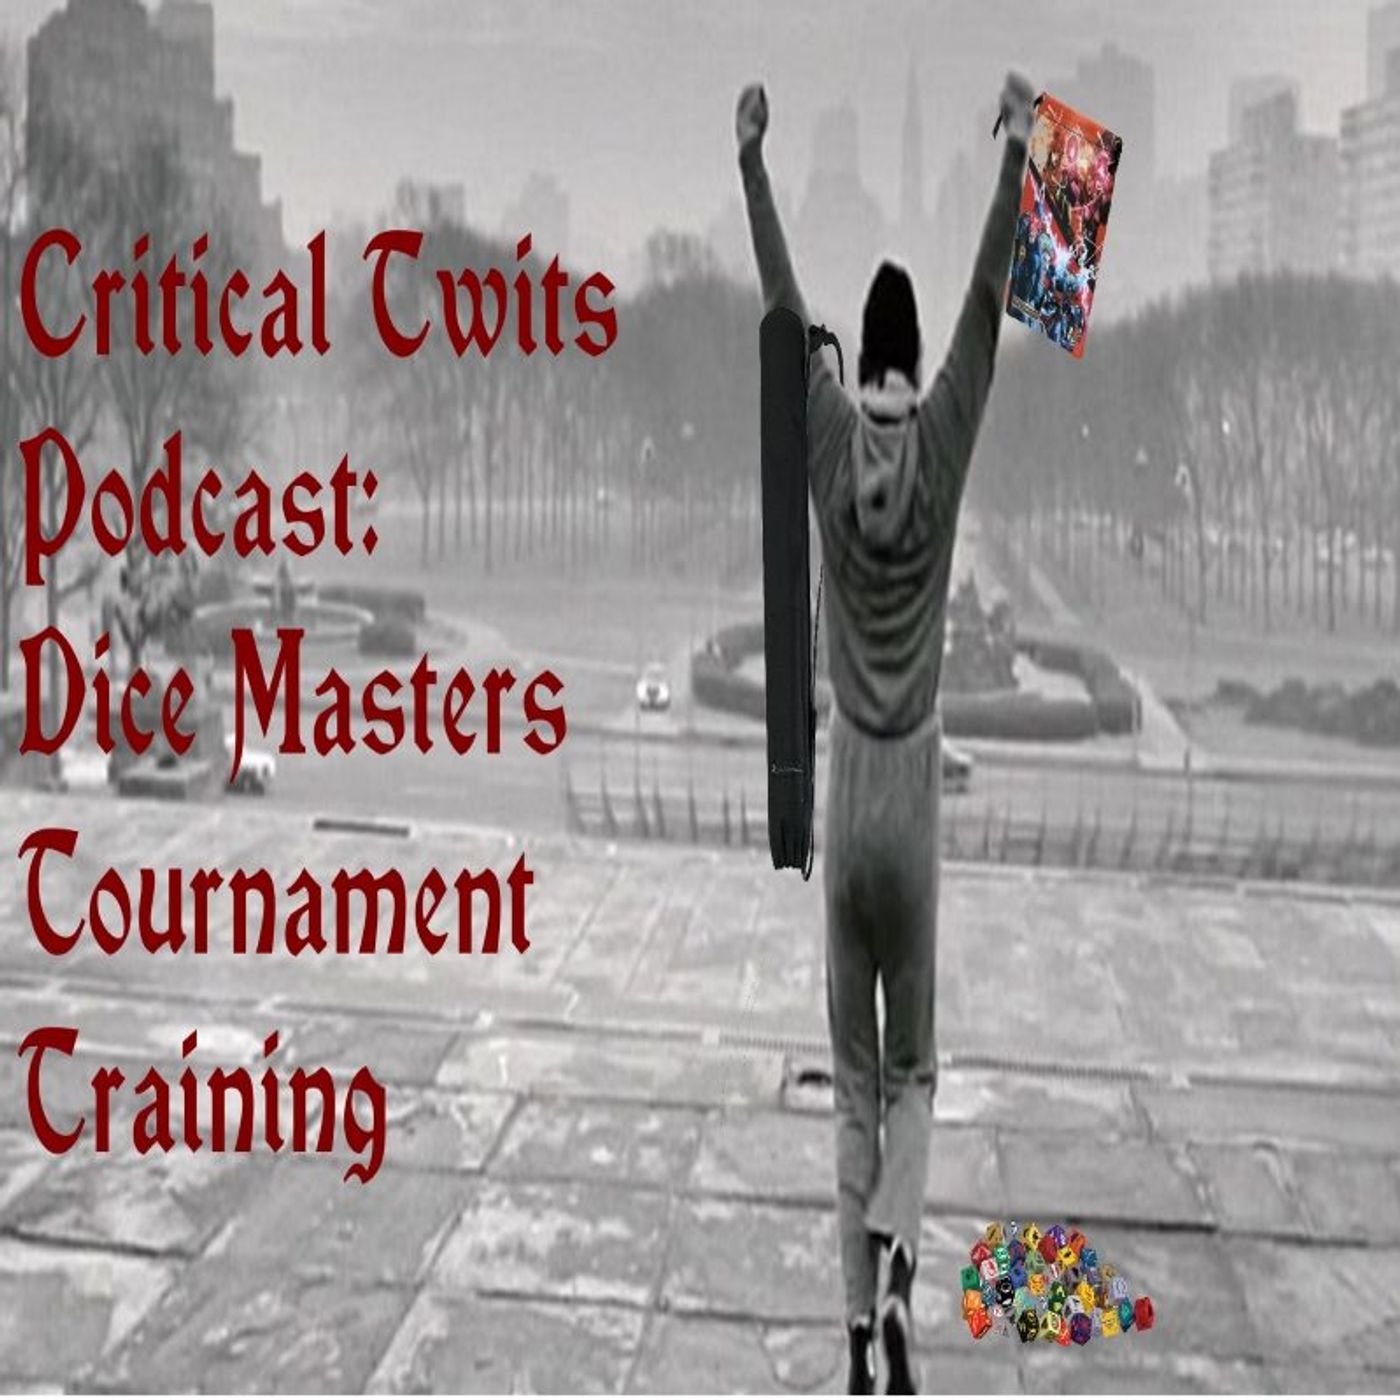 Ep 28: Dice Masters Tournament Training